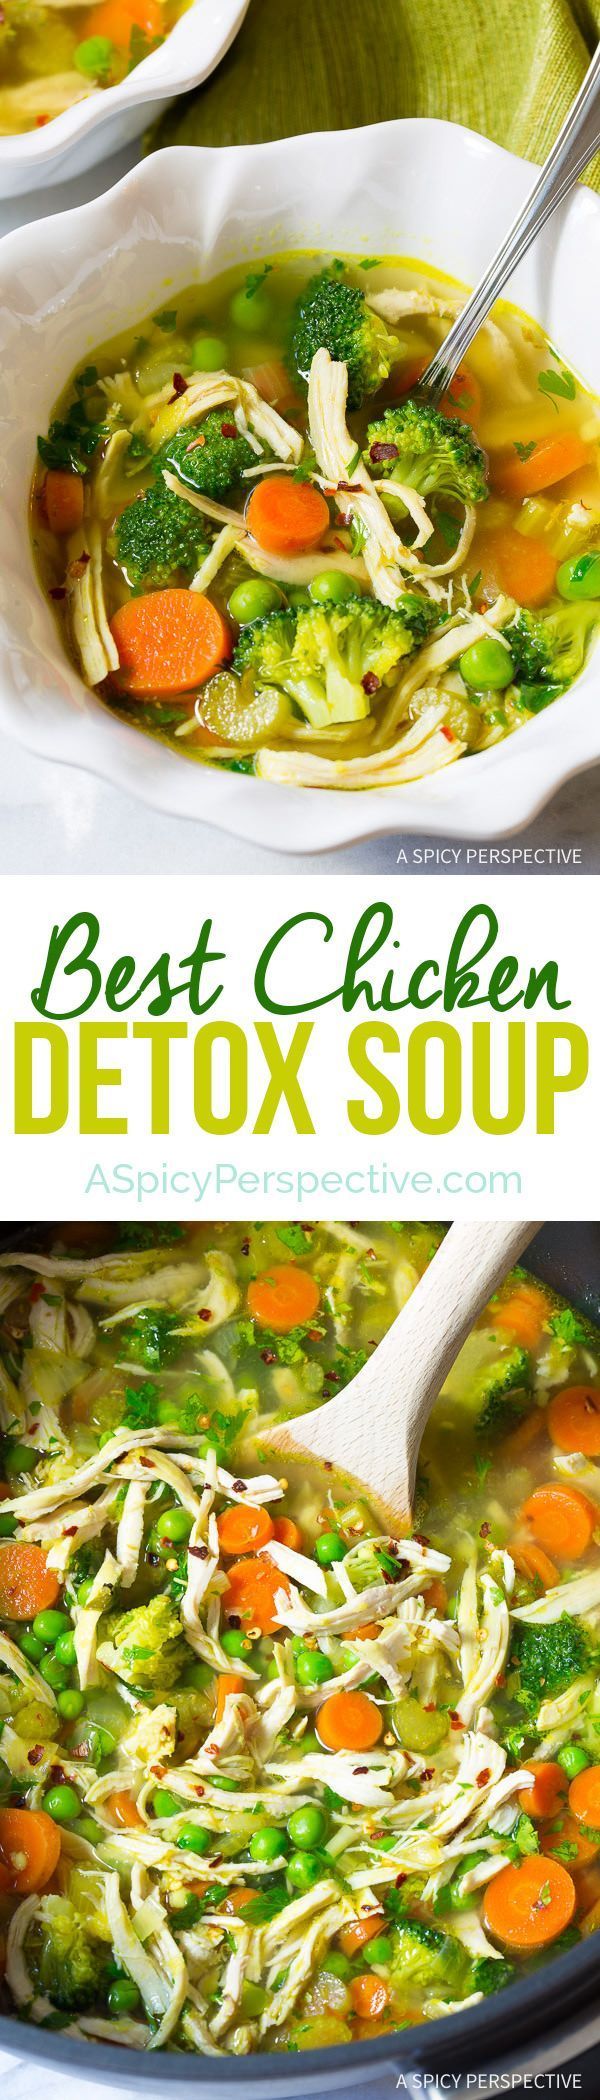 Best Ever Chicken Detox Soup Recipe & Cleanse | ASpicyPerspective.com…